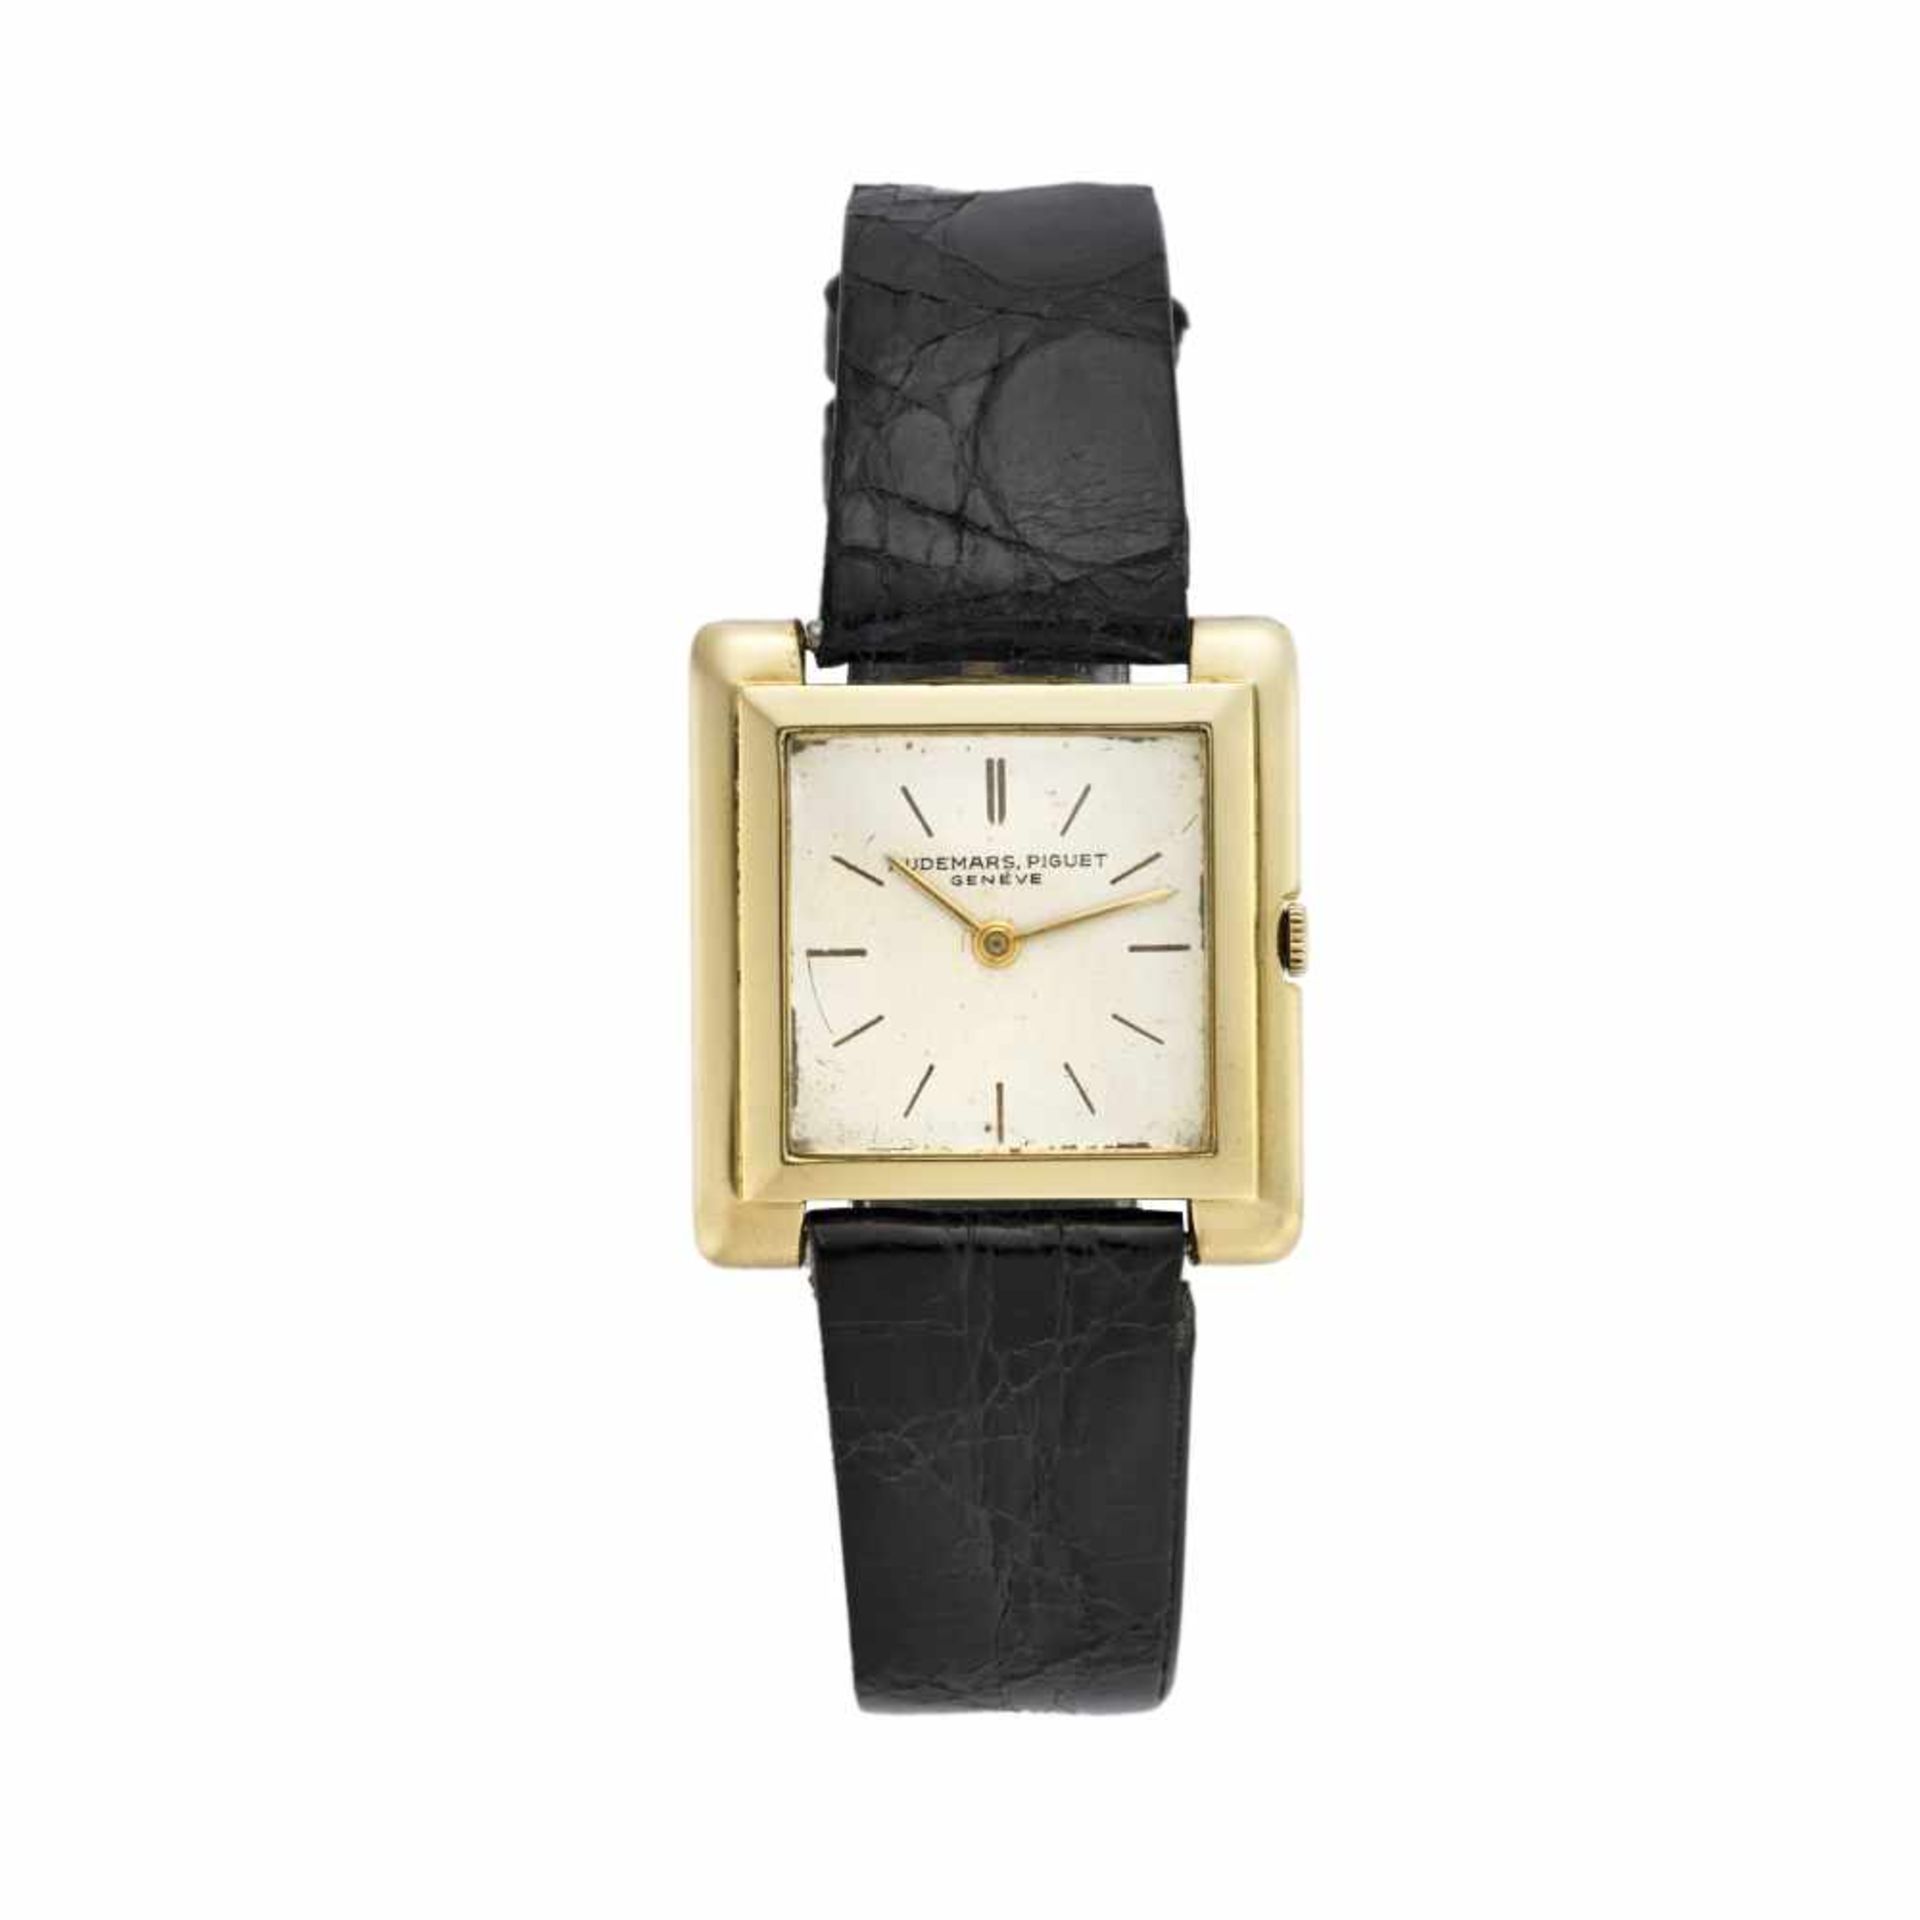 AUDEMARS PIGUET "CIOCCOLATINO ULTRAPIATTO" Gent's 18K gold wristwatch1940s/1950sDial, movement and